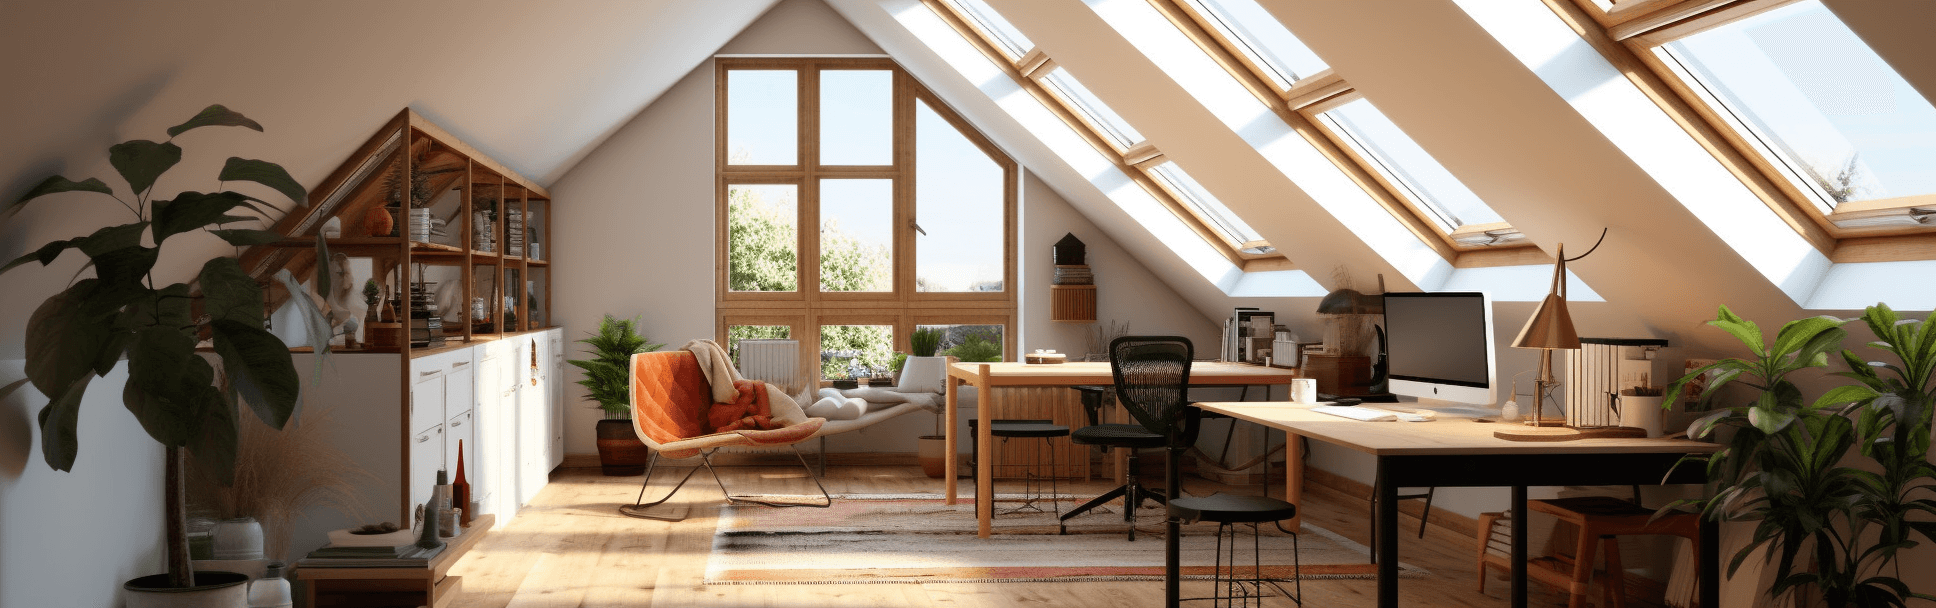 spacious hip-and-gable attic room